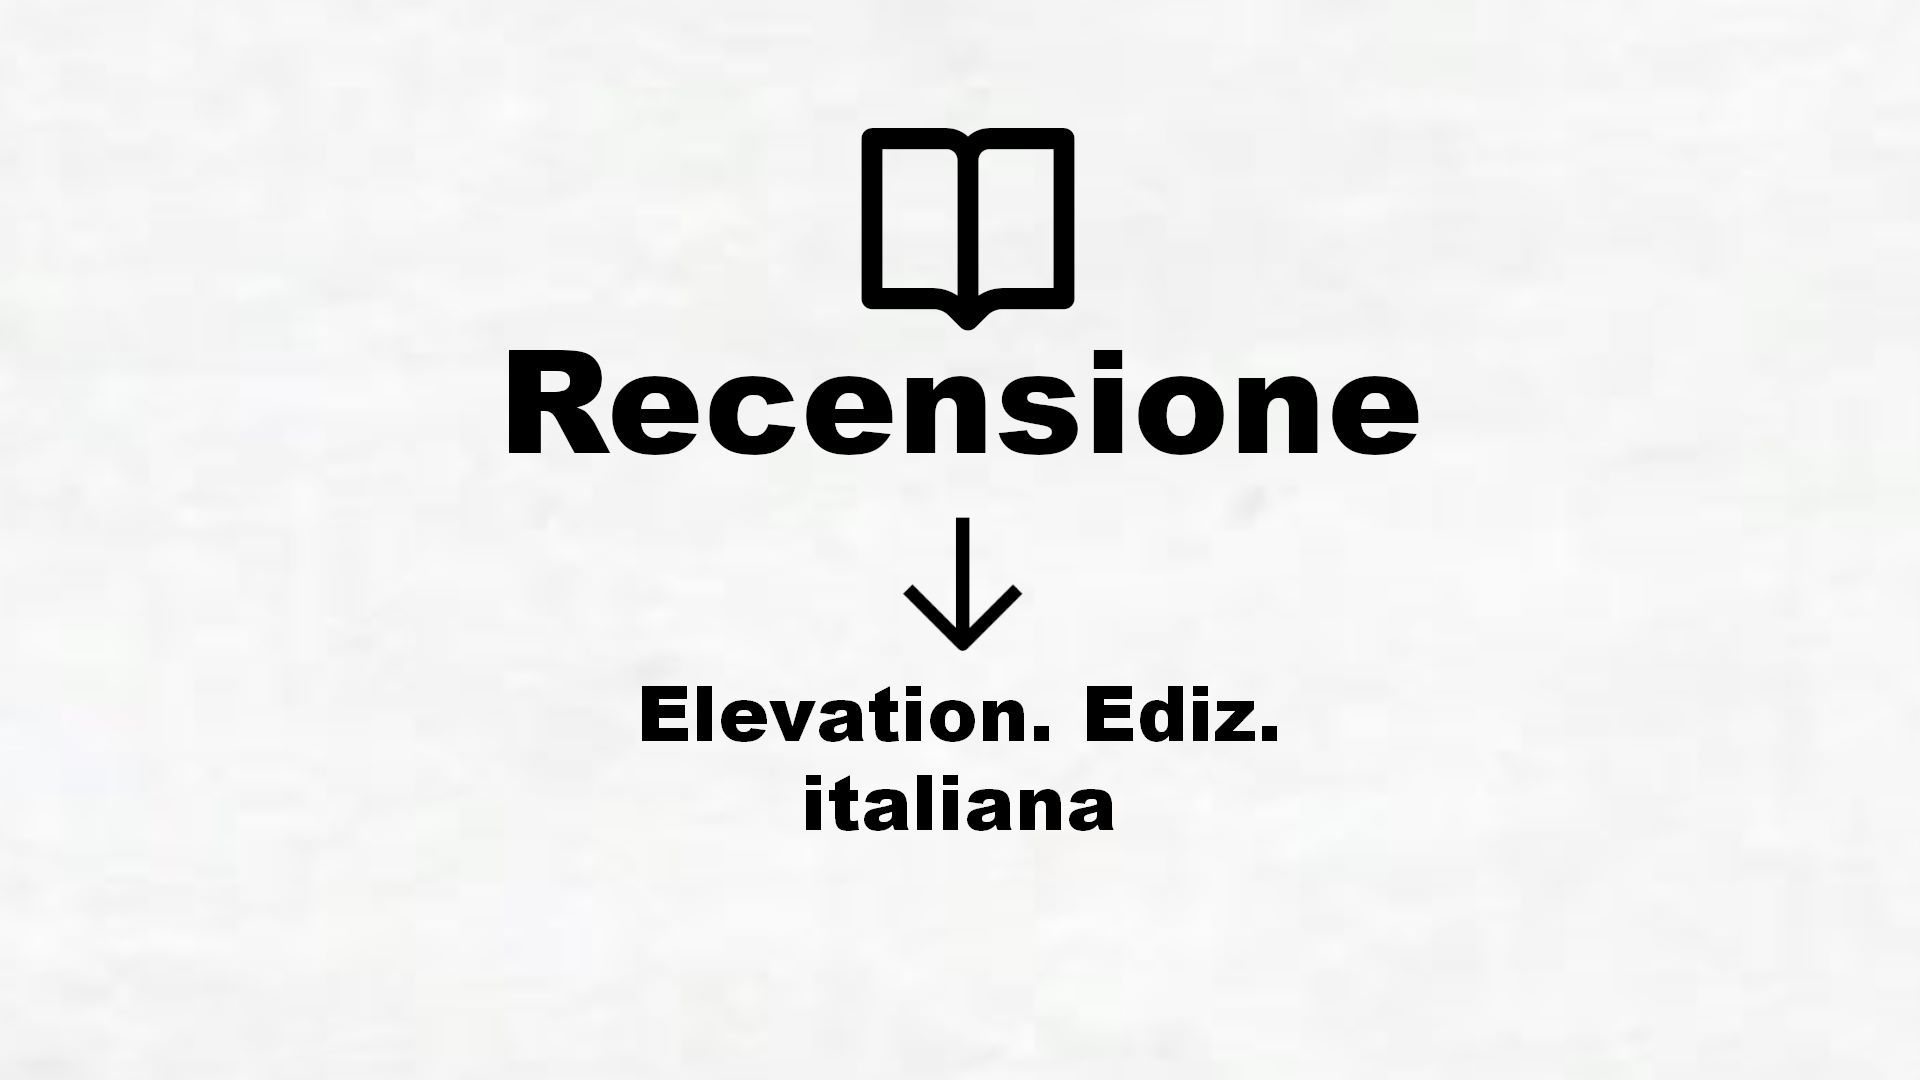 Elevation. Ediz. italiana – Recensione Libro